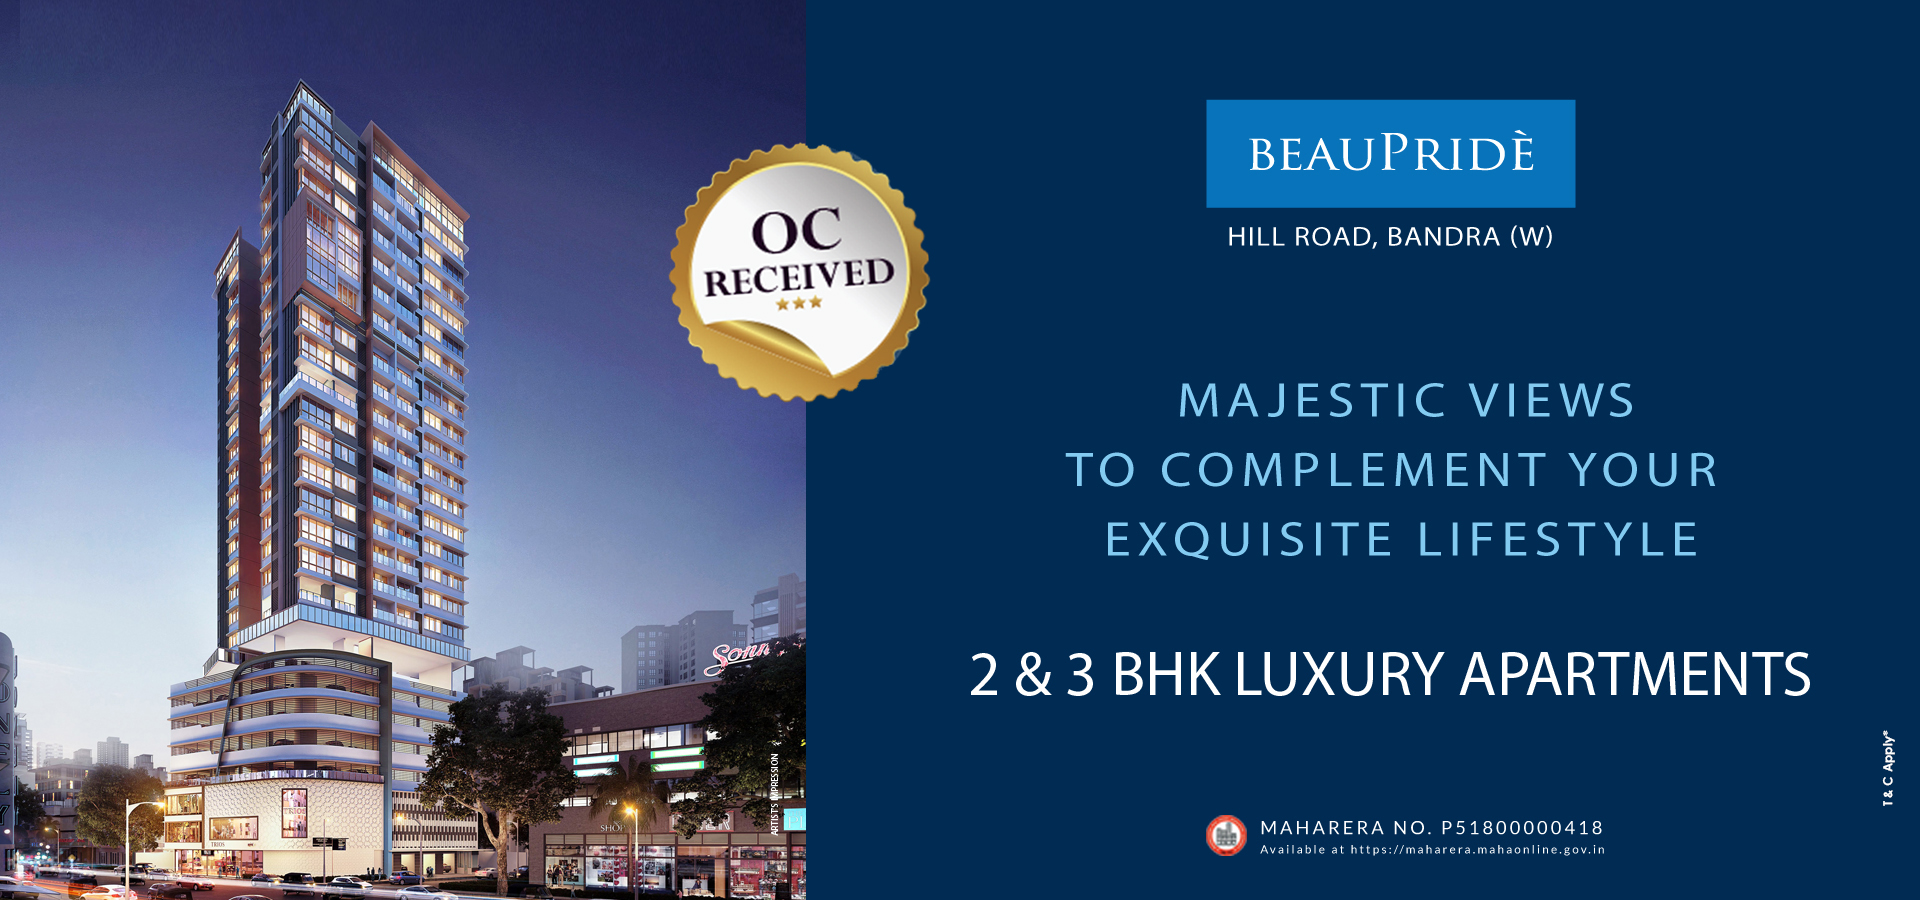 Book 2 & 3 BHK luxury apartments at Sheth Beau Pride, Mumbai Update